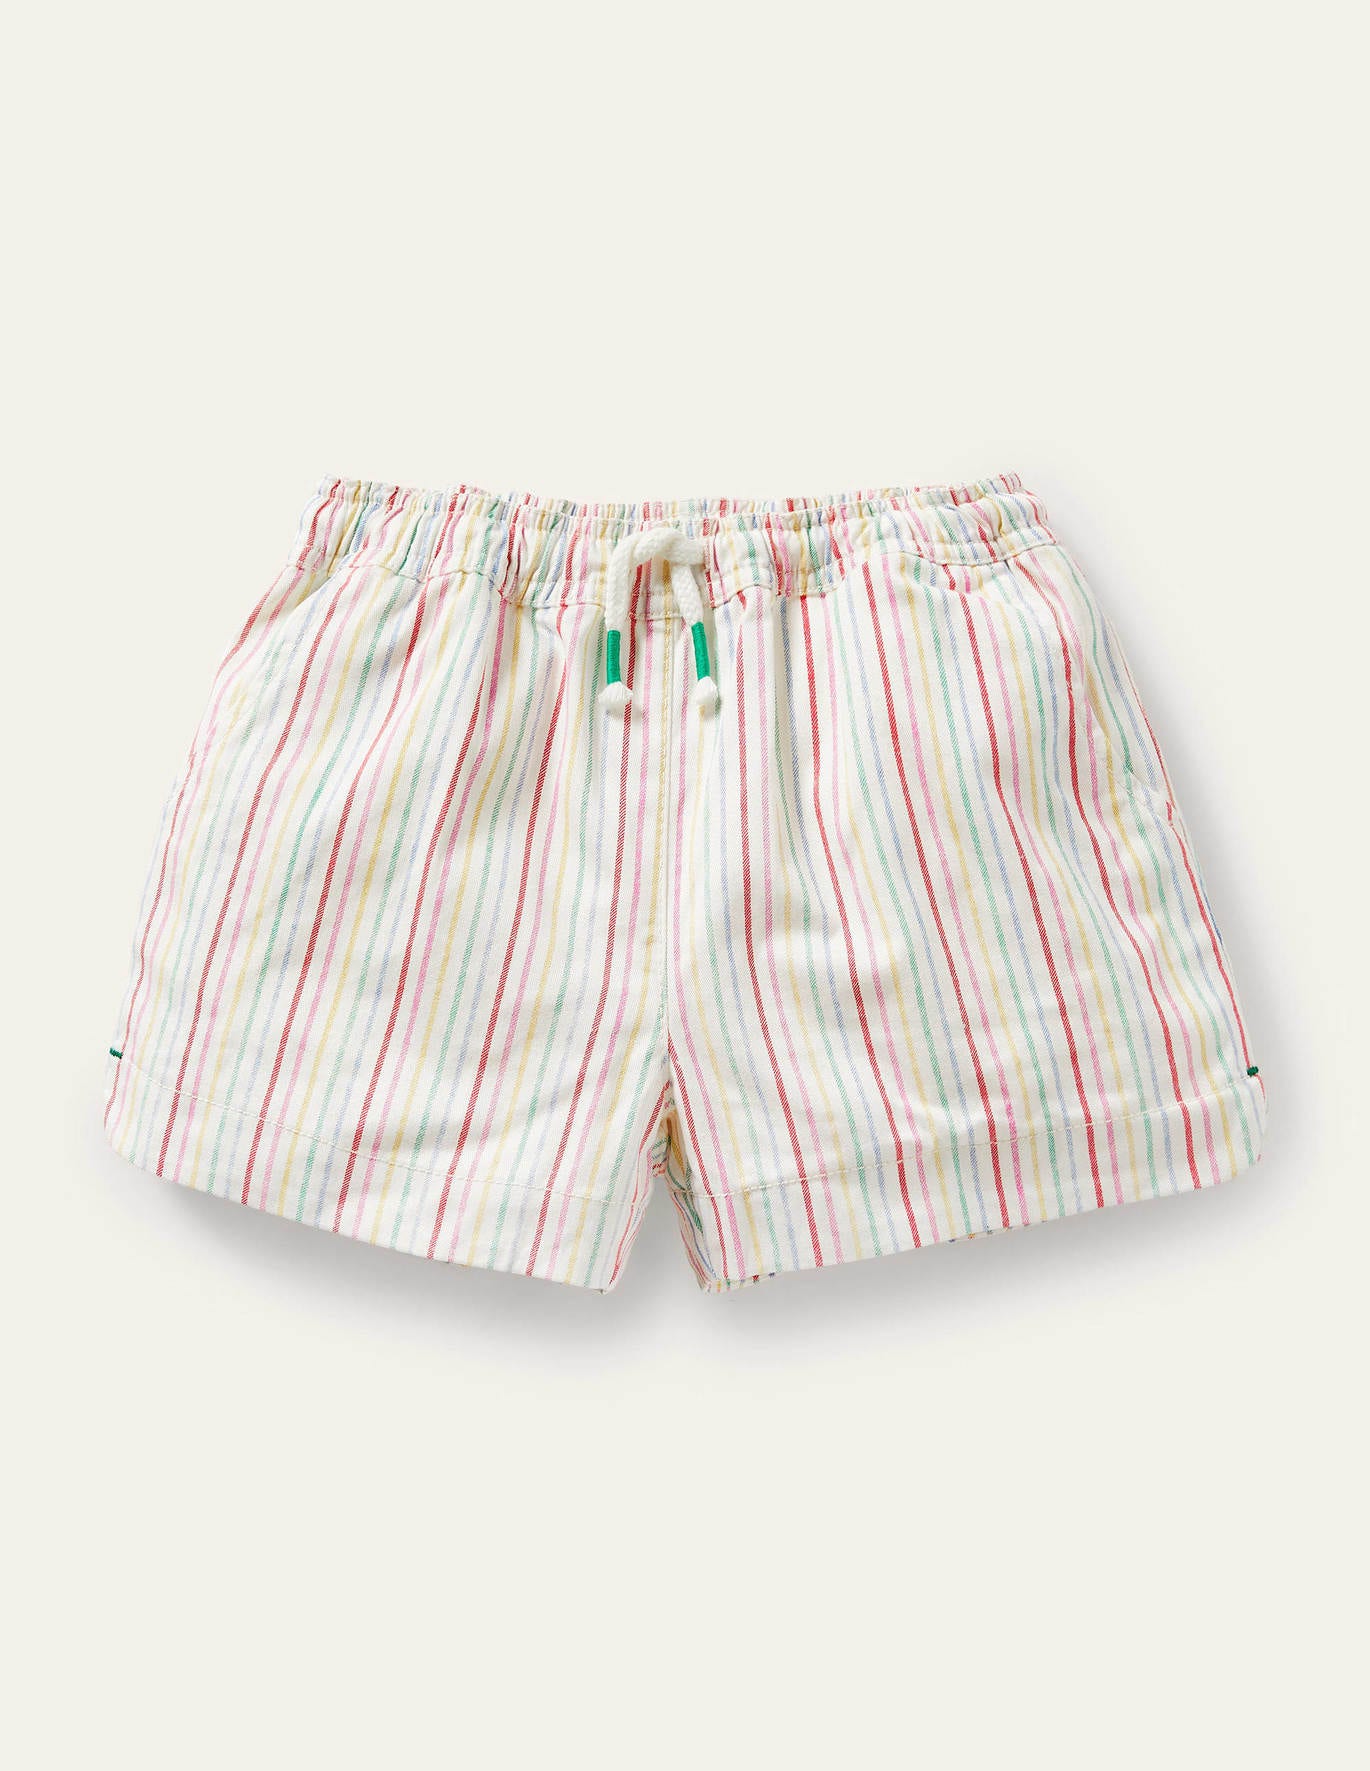 Boden Heart Pocket Shorts - Ivory/ Multi Stripe